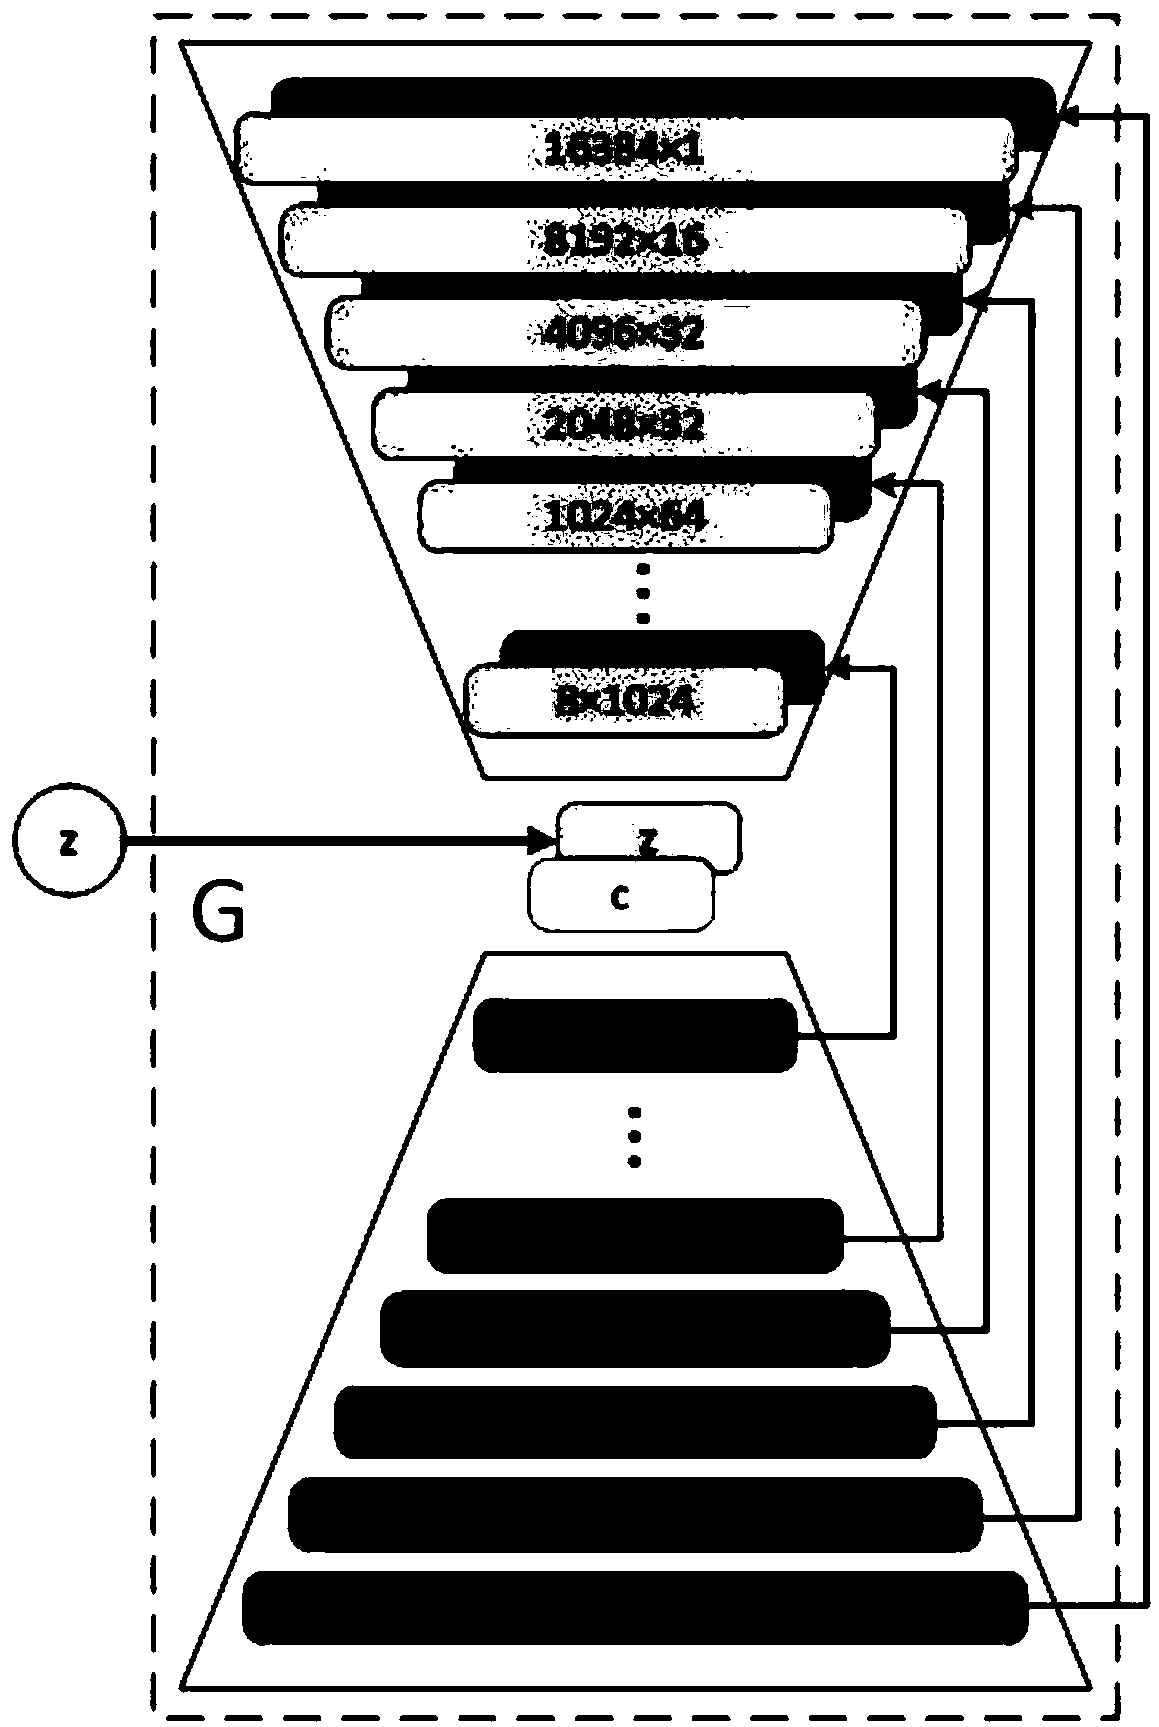 Voice denoising method based on computational auditory scene analysis and countermeasure network model generation